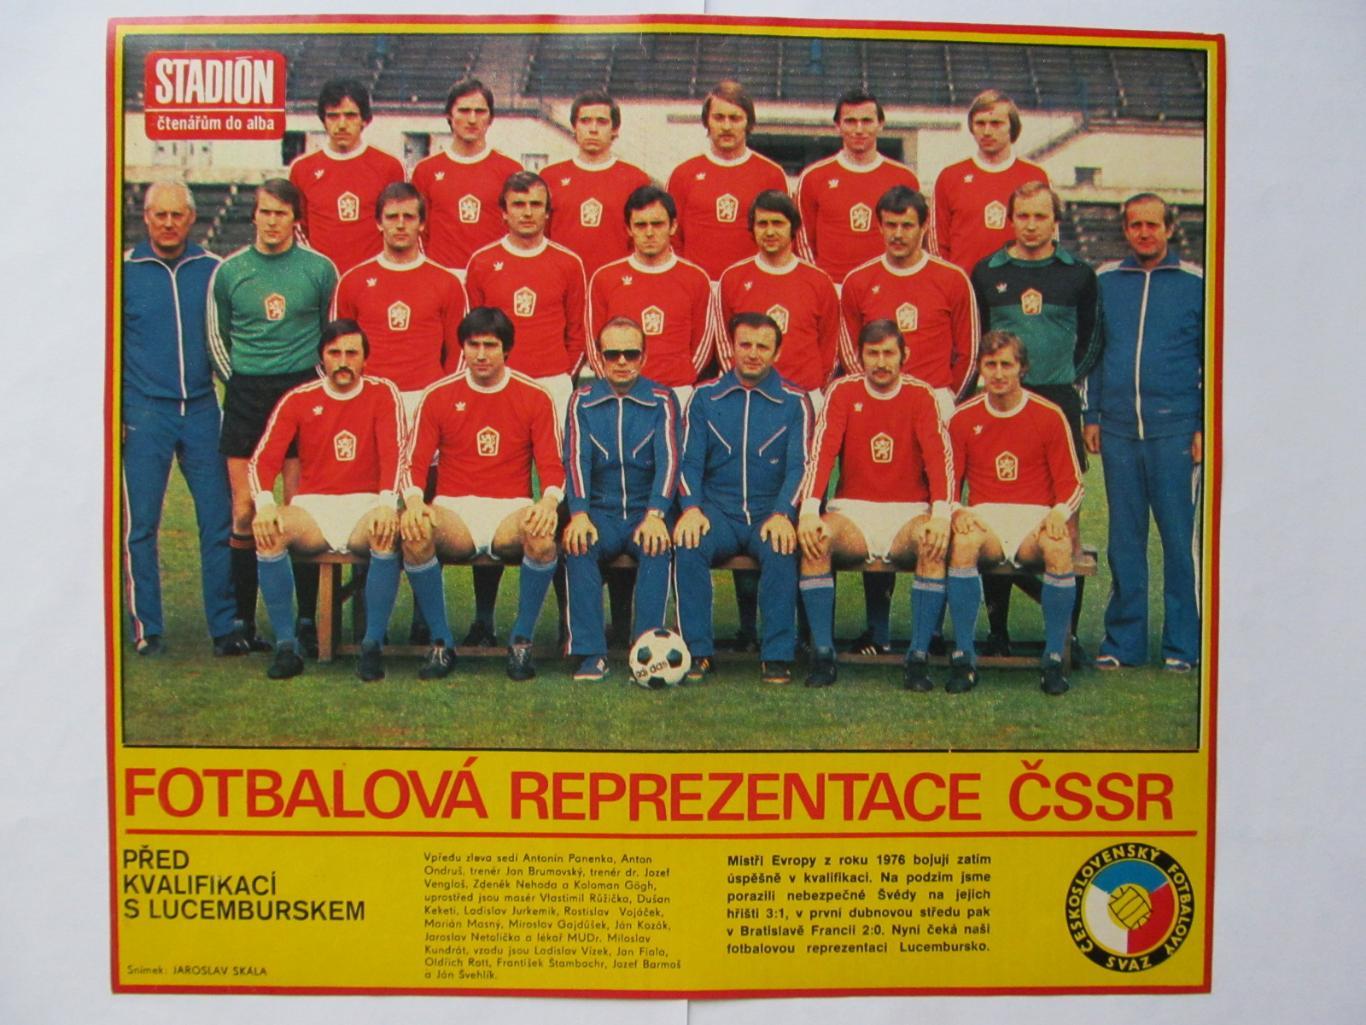 Постер сб. ЧССР из журнала Stadion/Стадион 1979г